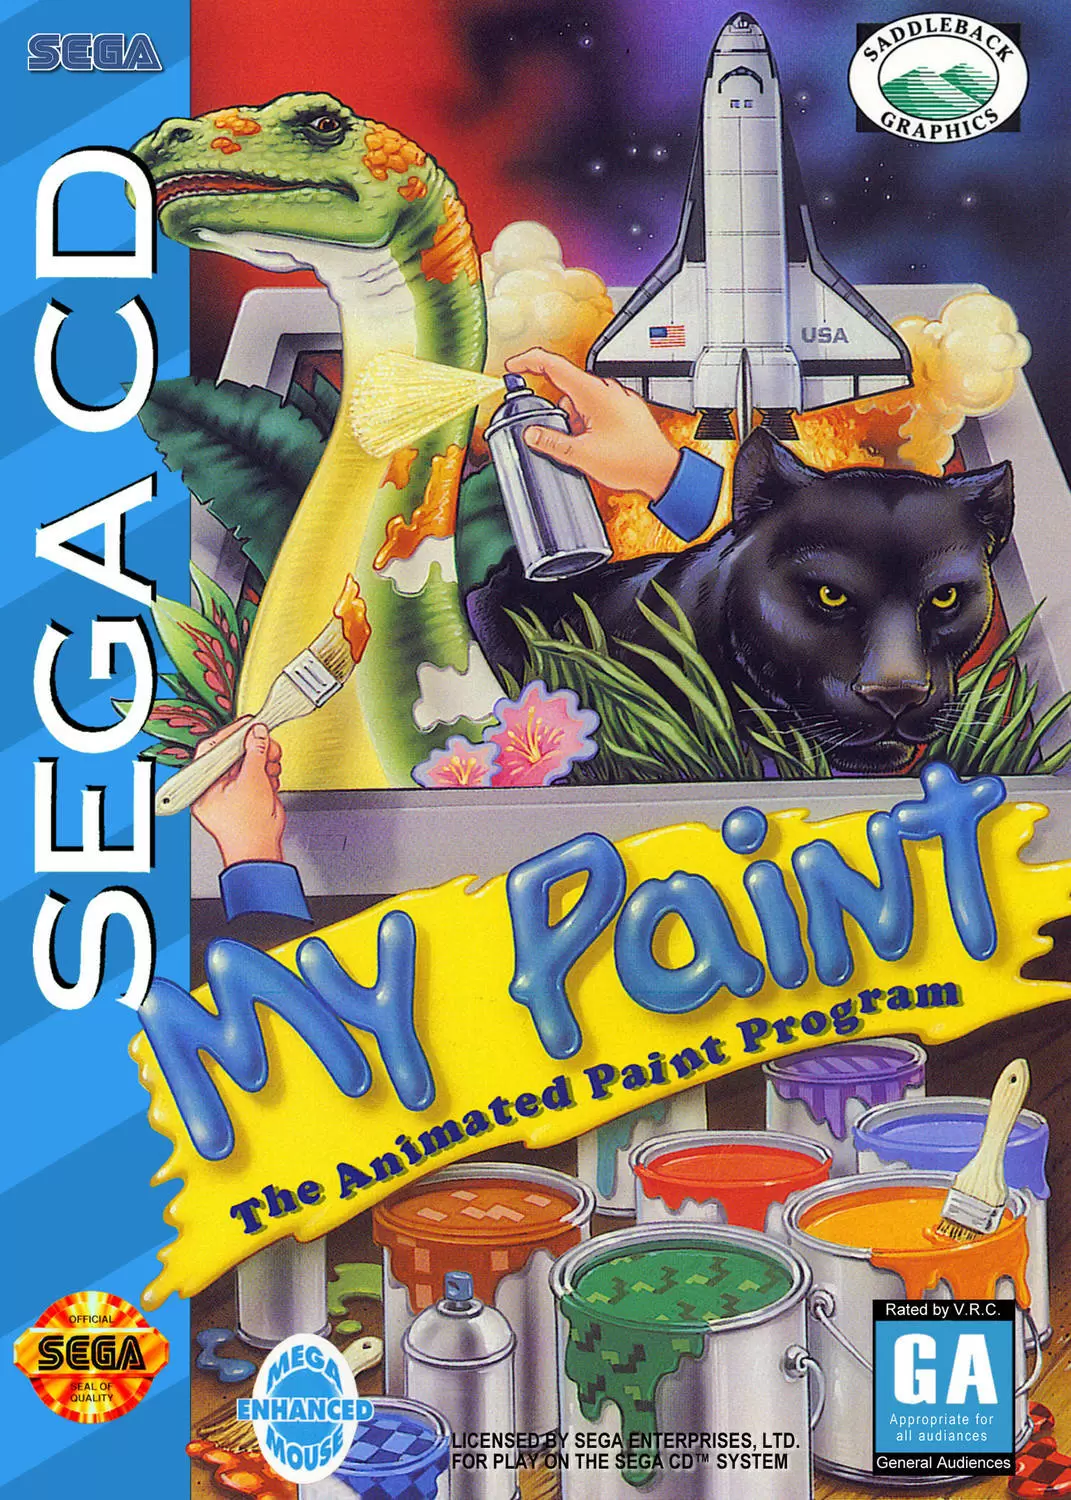 SEGA Mega CD Games - My Paint: The Animated Paint Program